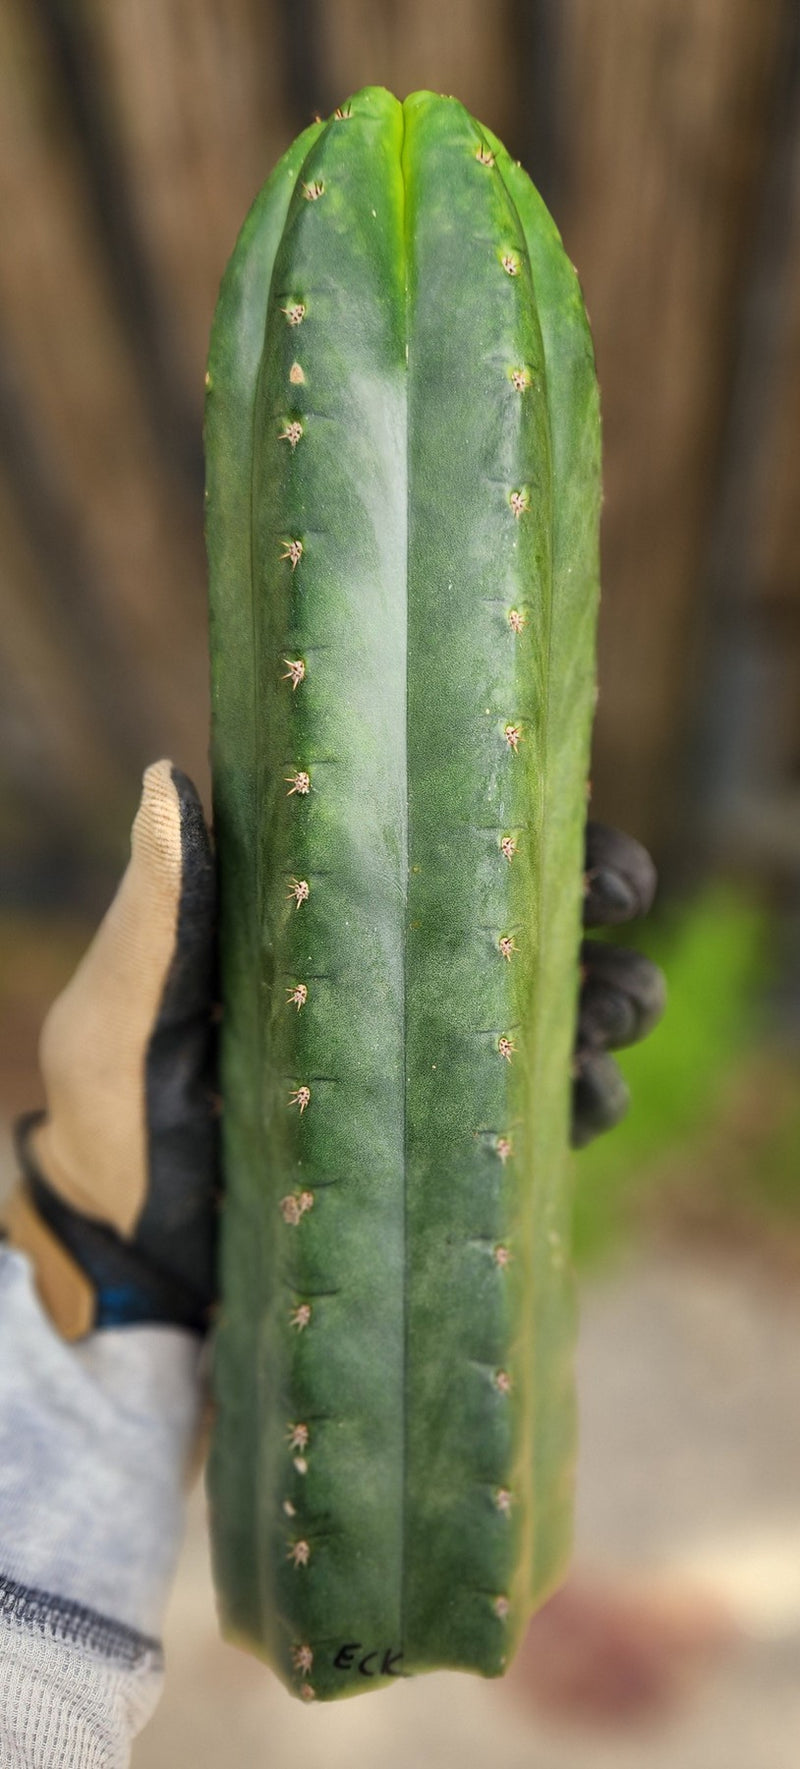 #EC43 EXACT Trichocereus Pachanoi ECK Cactus Potted and Cuttings